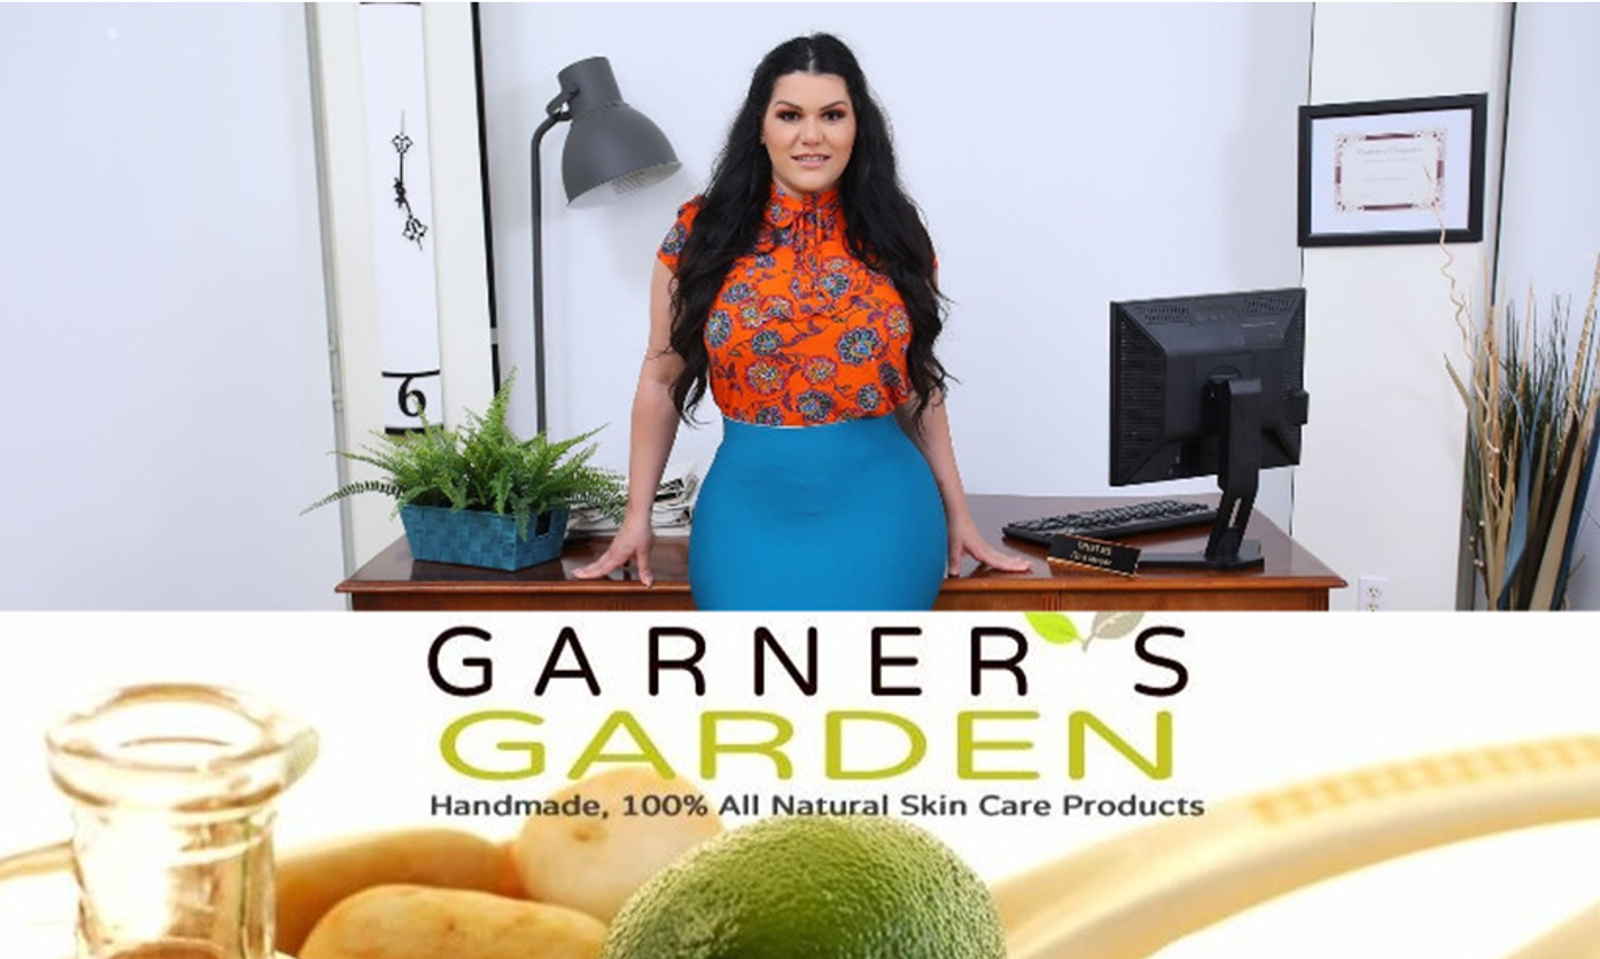 Angelina Castro Is The New Brand Ambassador For Garner's Garden